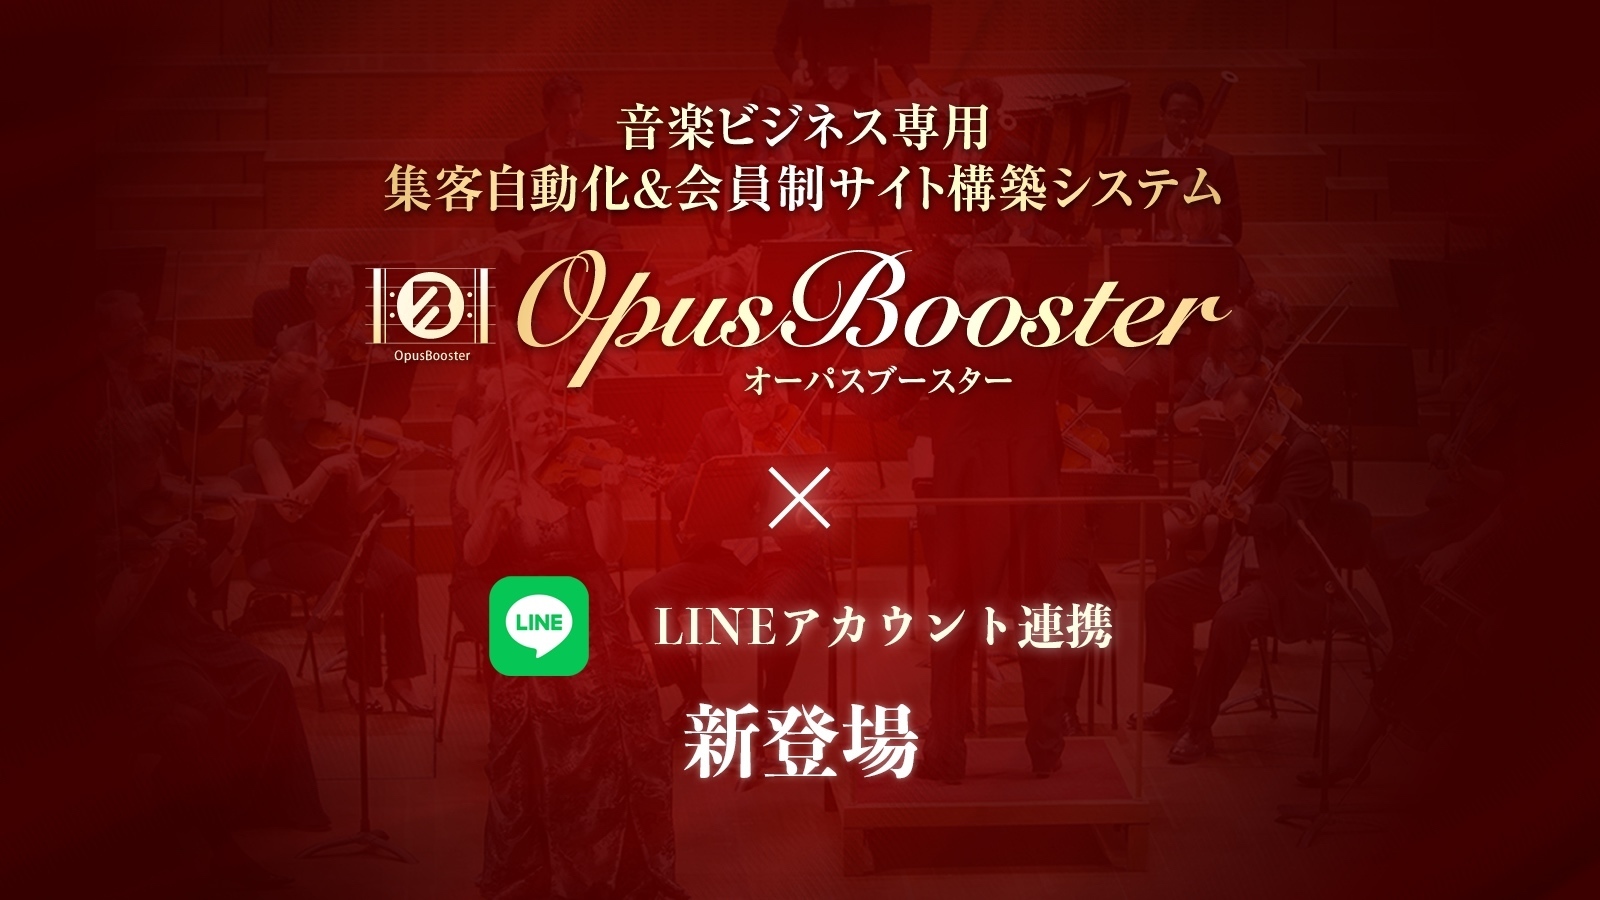 IT専門家を雇うことなく音楽ビジネスをオンライン化できる
「OpusBooster(オーパスブースター)」、
「LINEアカウント連携」が3月24日(木)に可能に